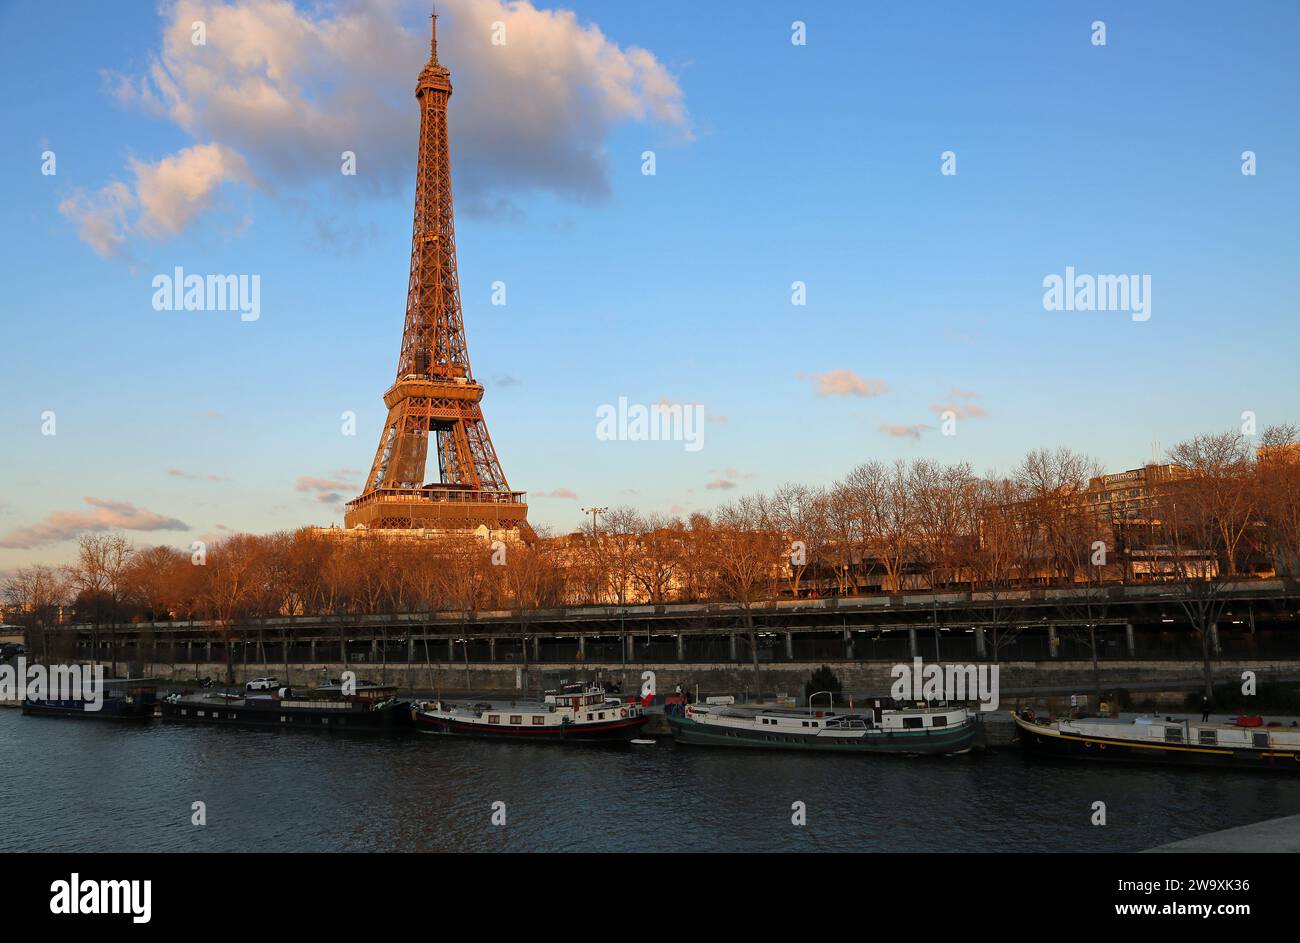 Eiffel tower at sunset - Paris Stock Photo